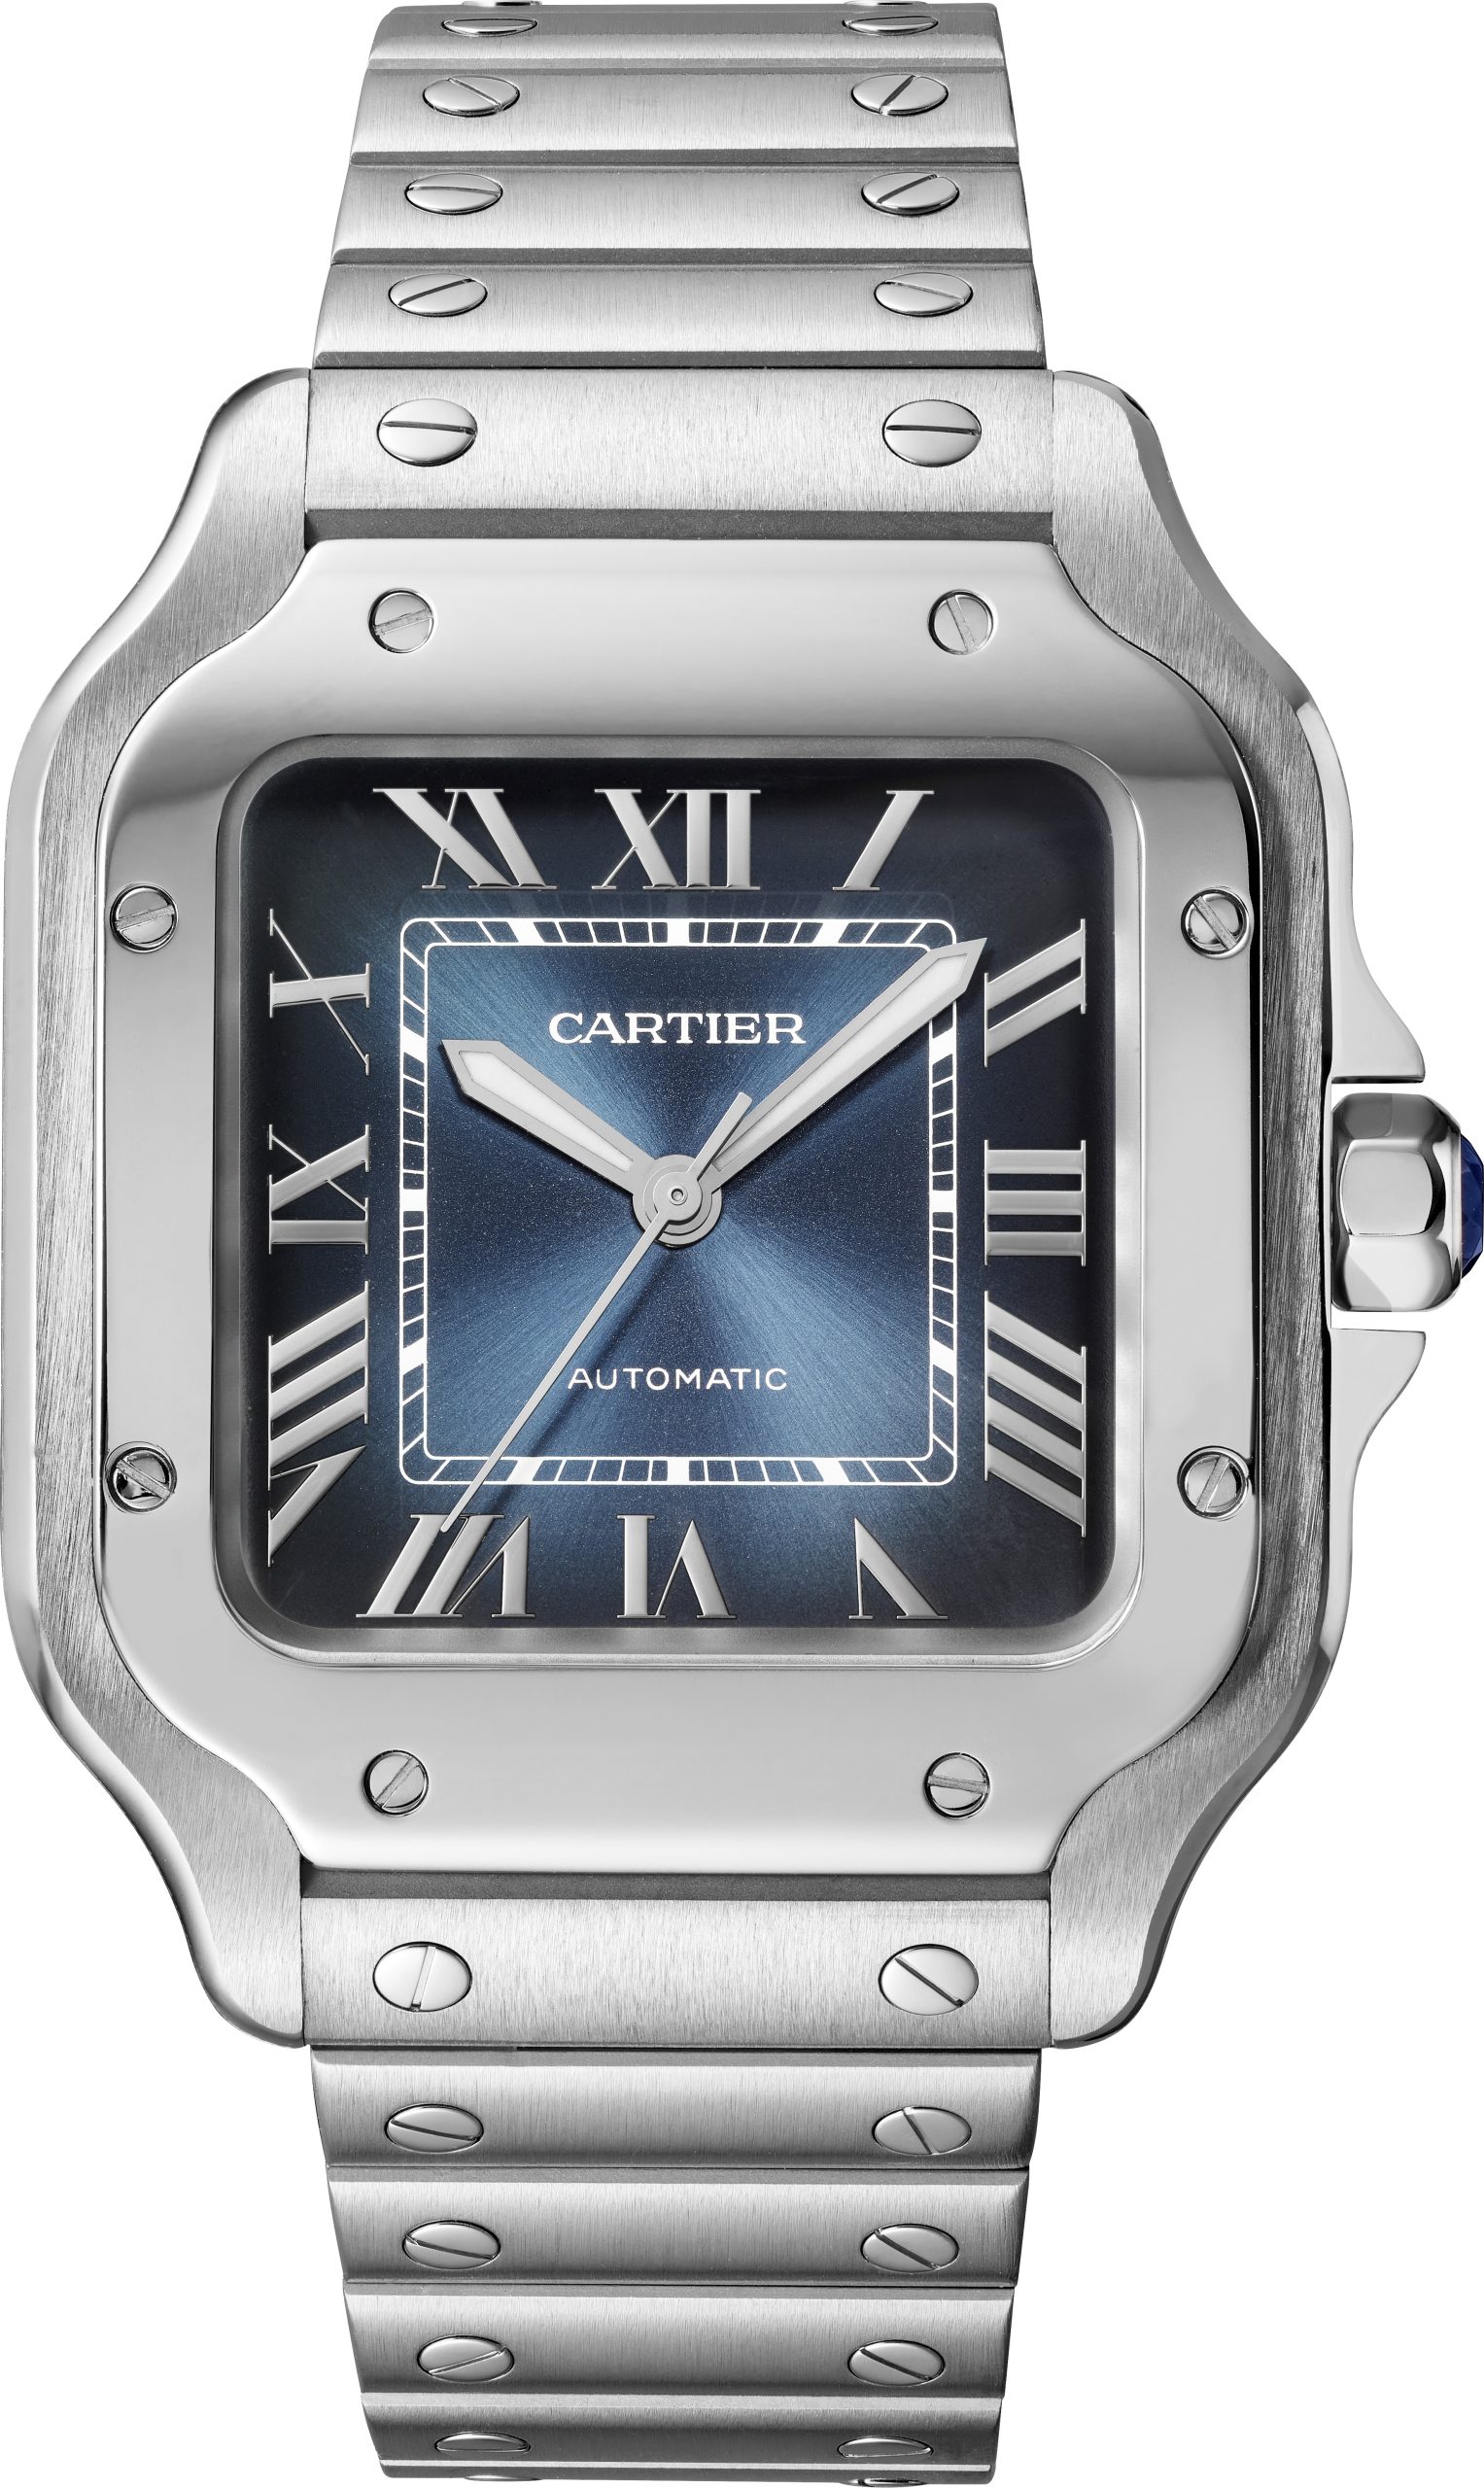 Un nuovo audace colore per il Cartier Santos